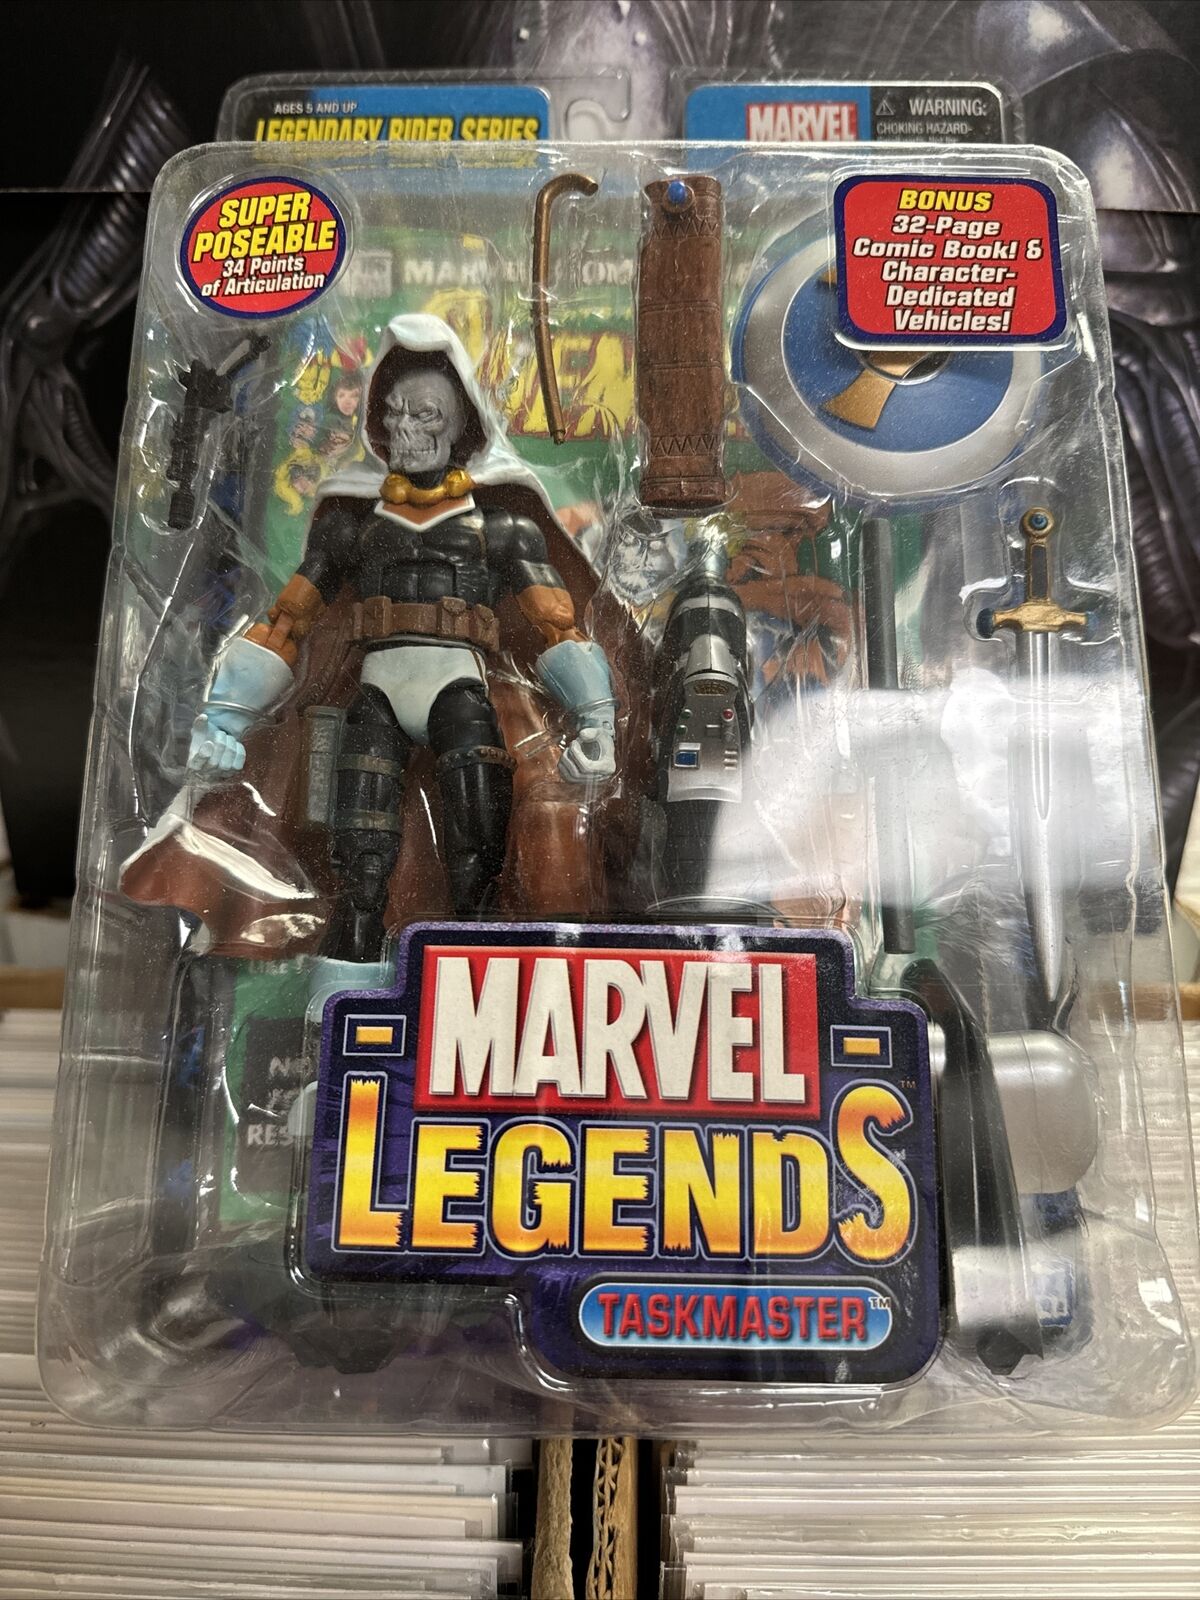 Marvel Legends Taskmaster Action Figure Toy Biz Legendary Rider Series Sealed